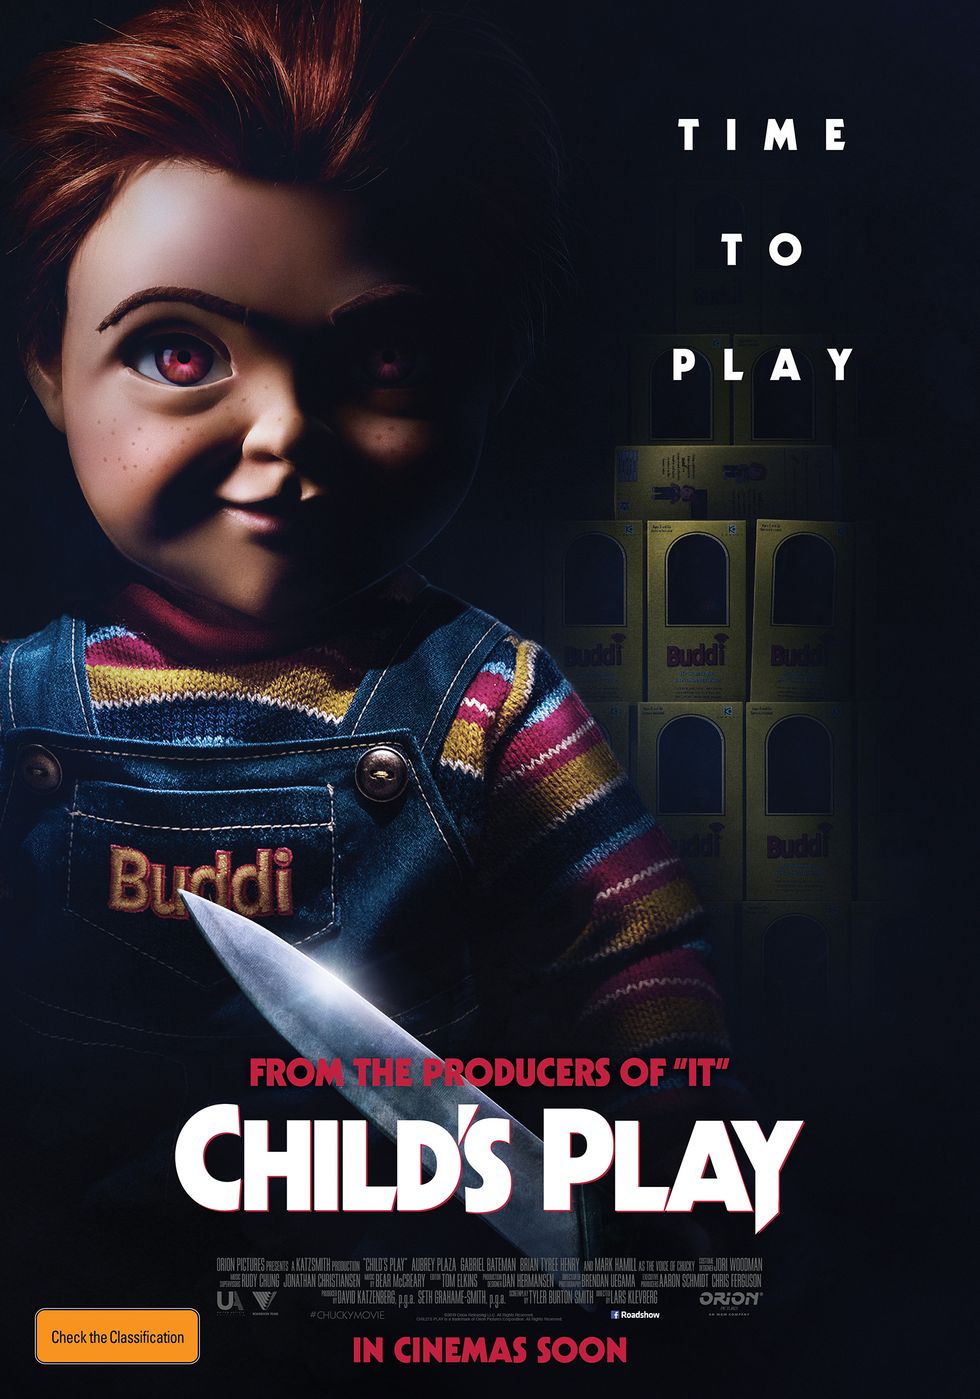 child's play 2019